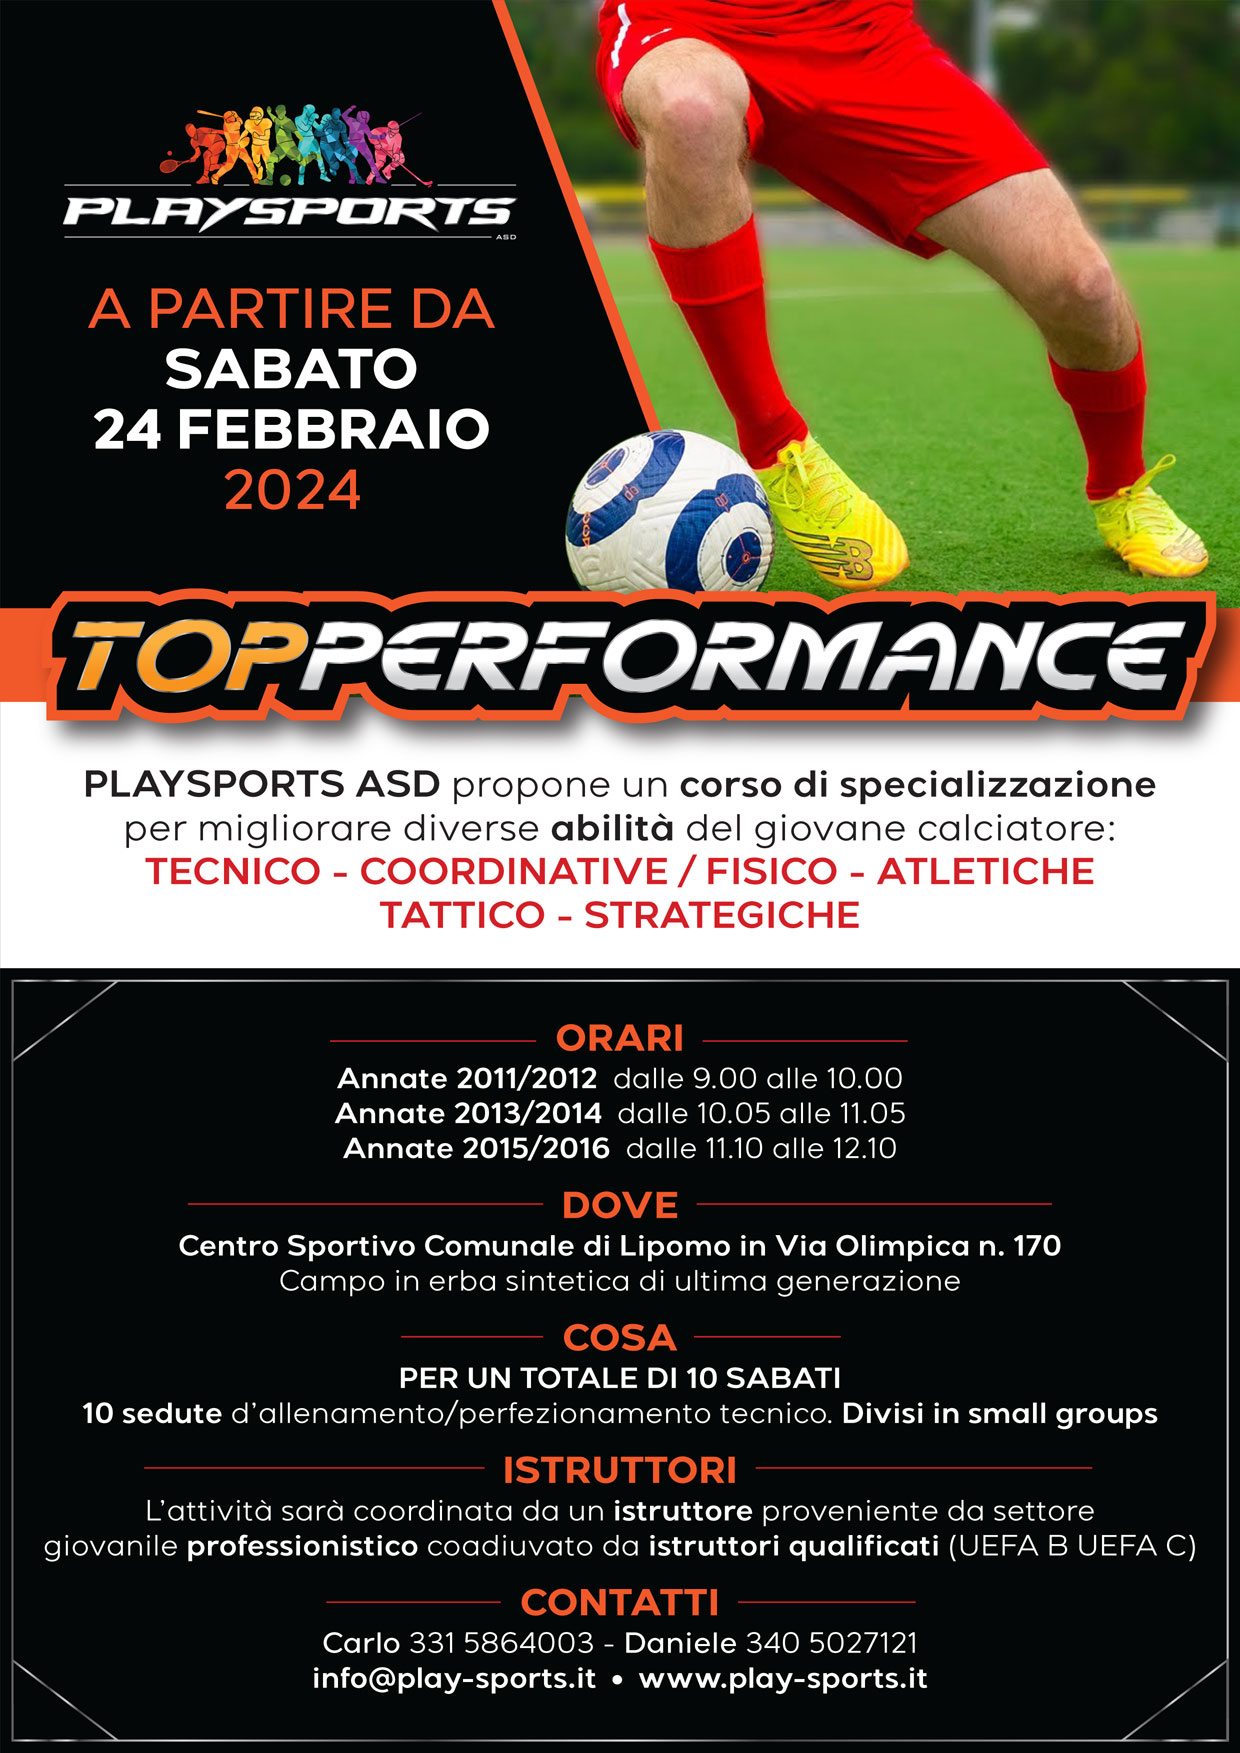 Volantino-Top-Performance-PLAYSPORTS-2024